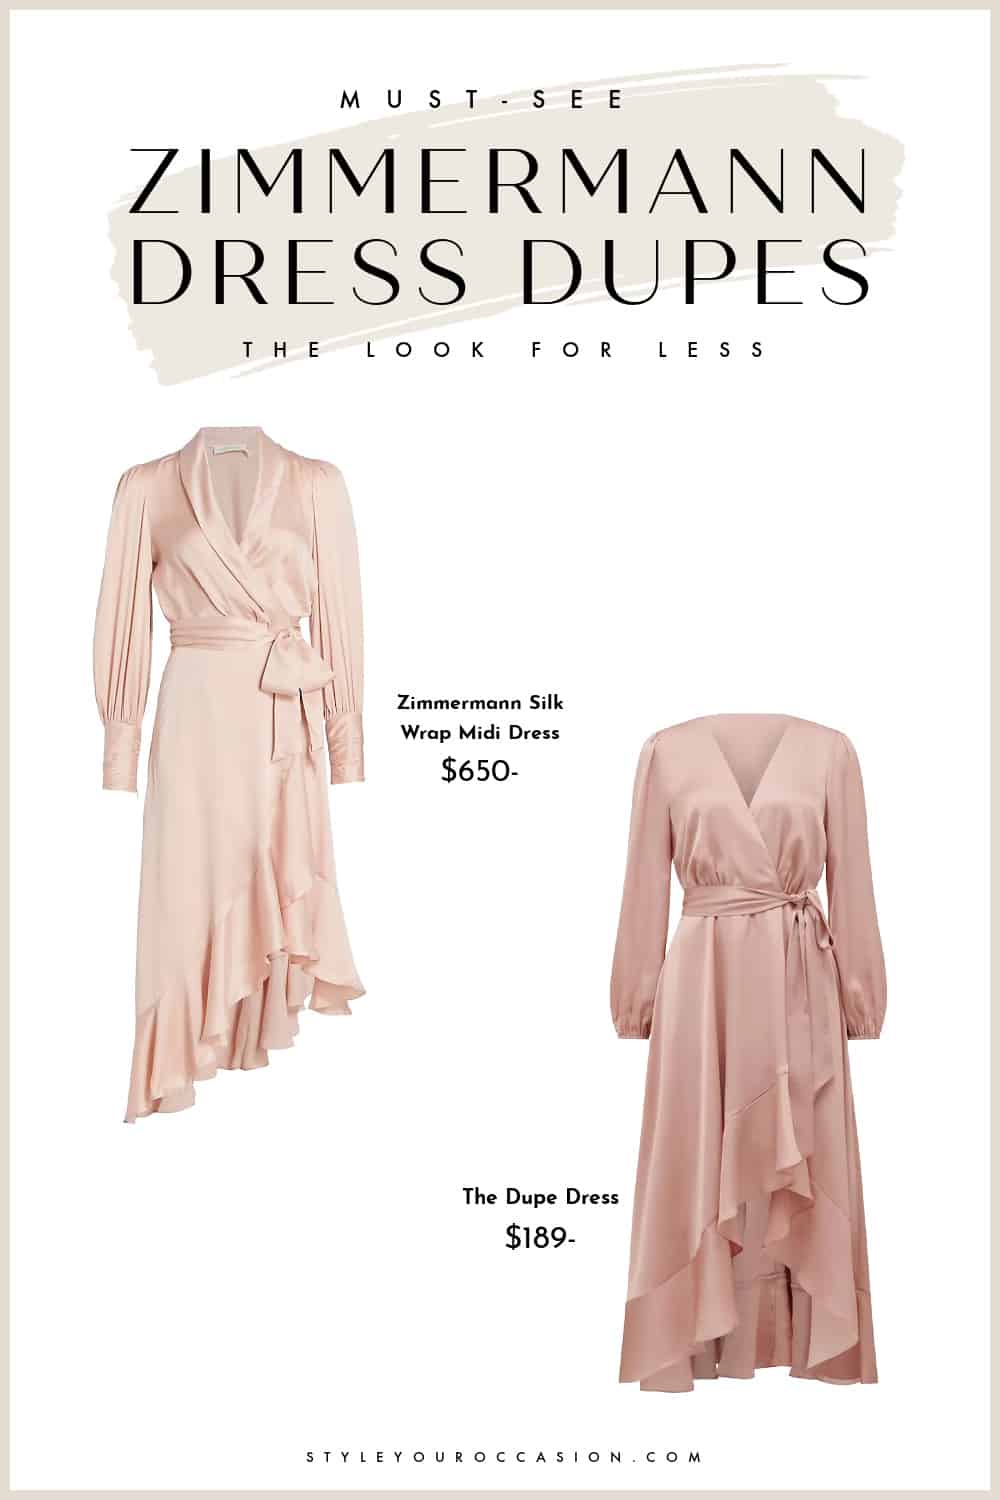 Image of a blush silk wrap Zimmermann midi dress alongside a similar looking dress dupe